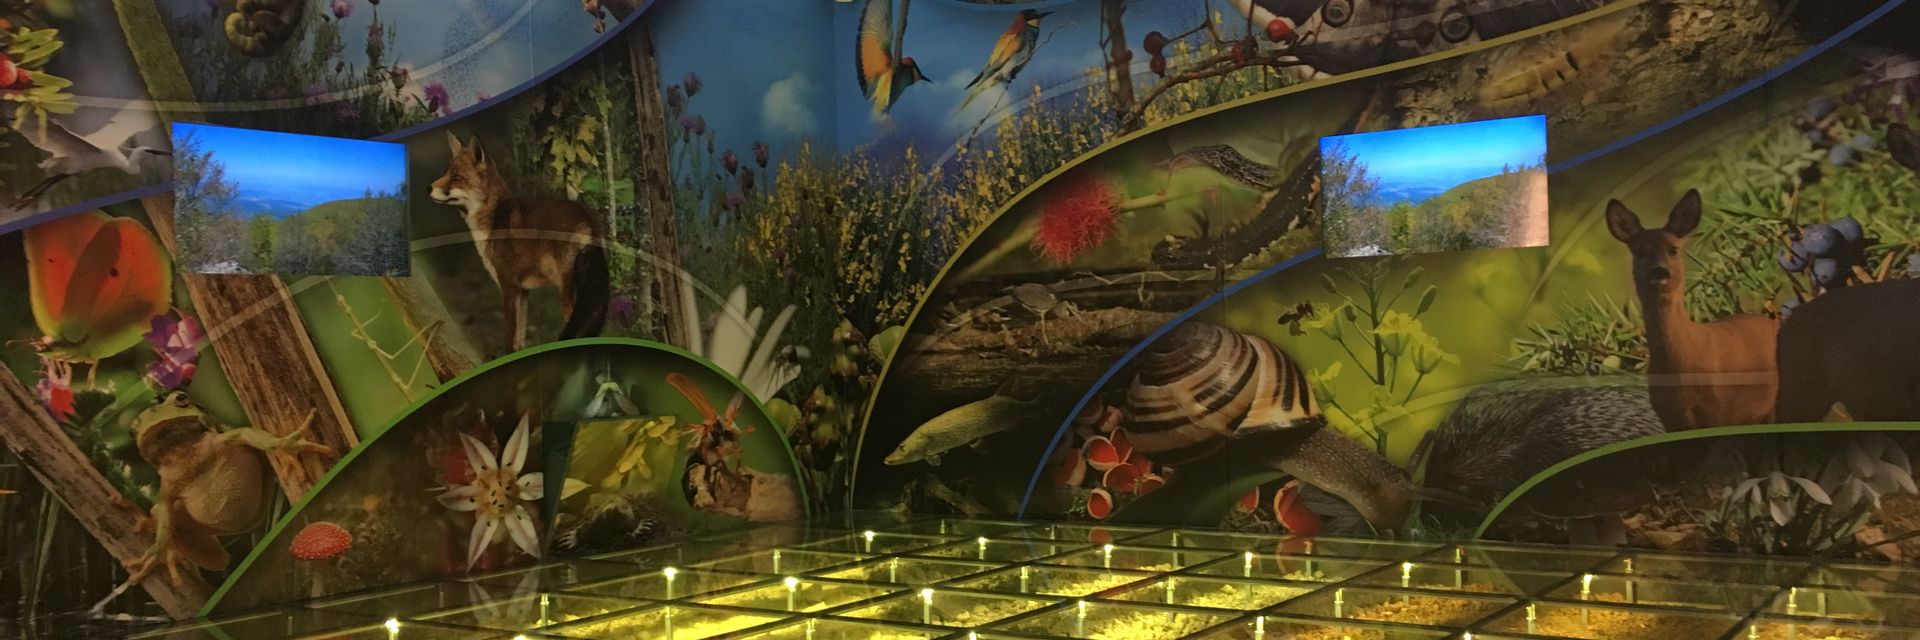 Biodiversity Museum